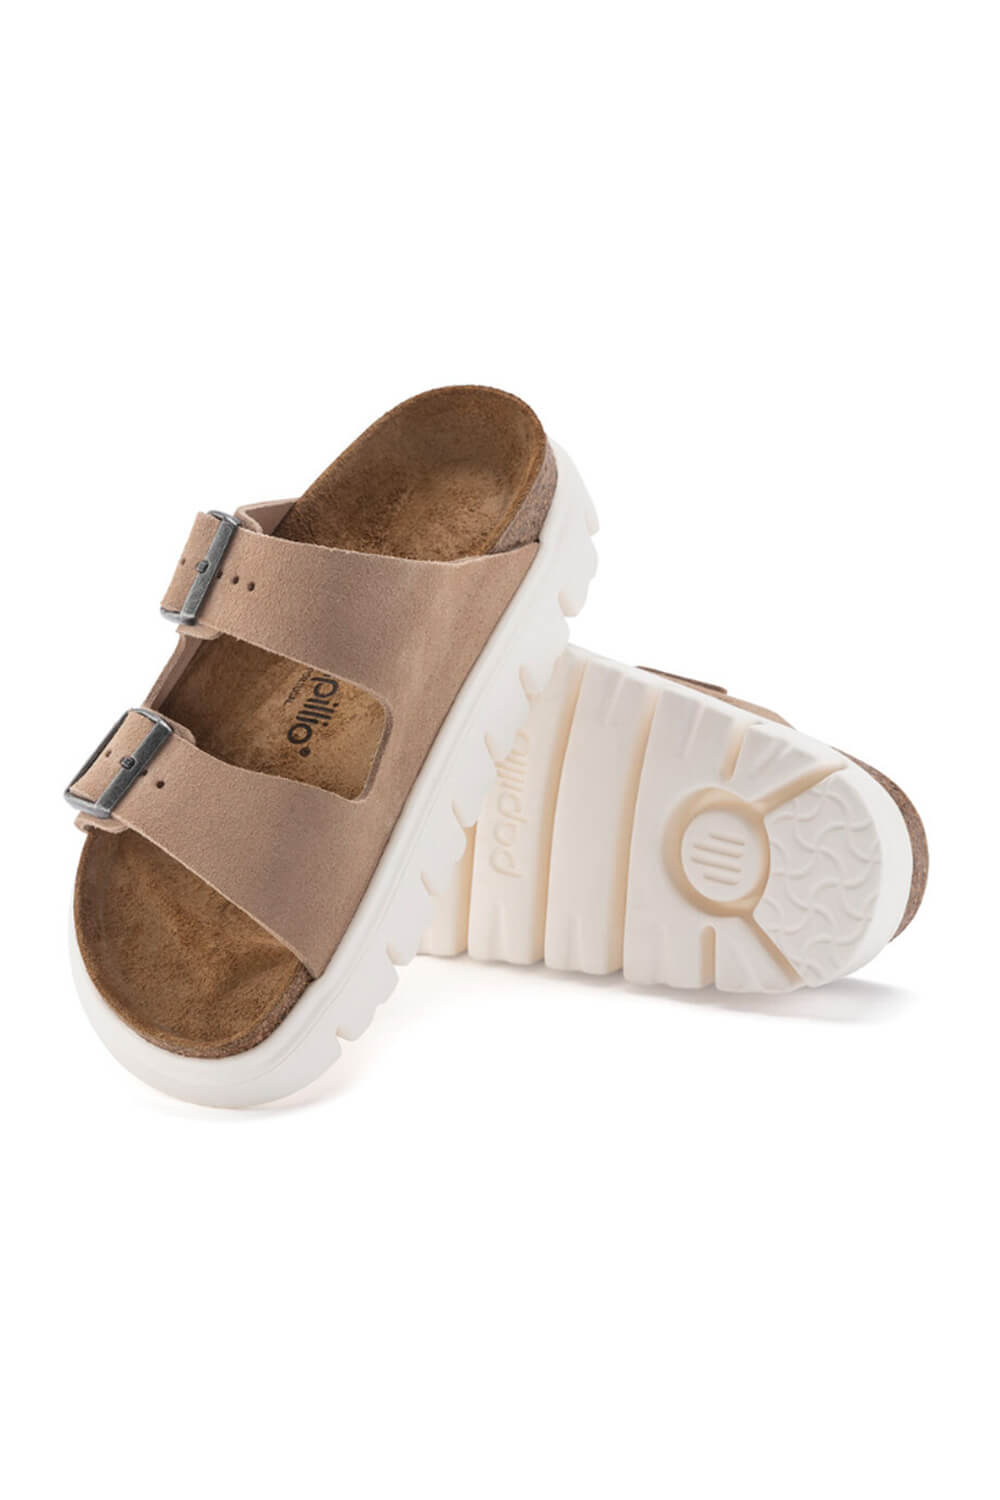 by Birkenstock Arizona Chunky Suede Sandals for Women in Sand – Glik's